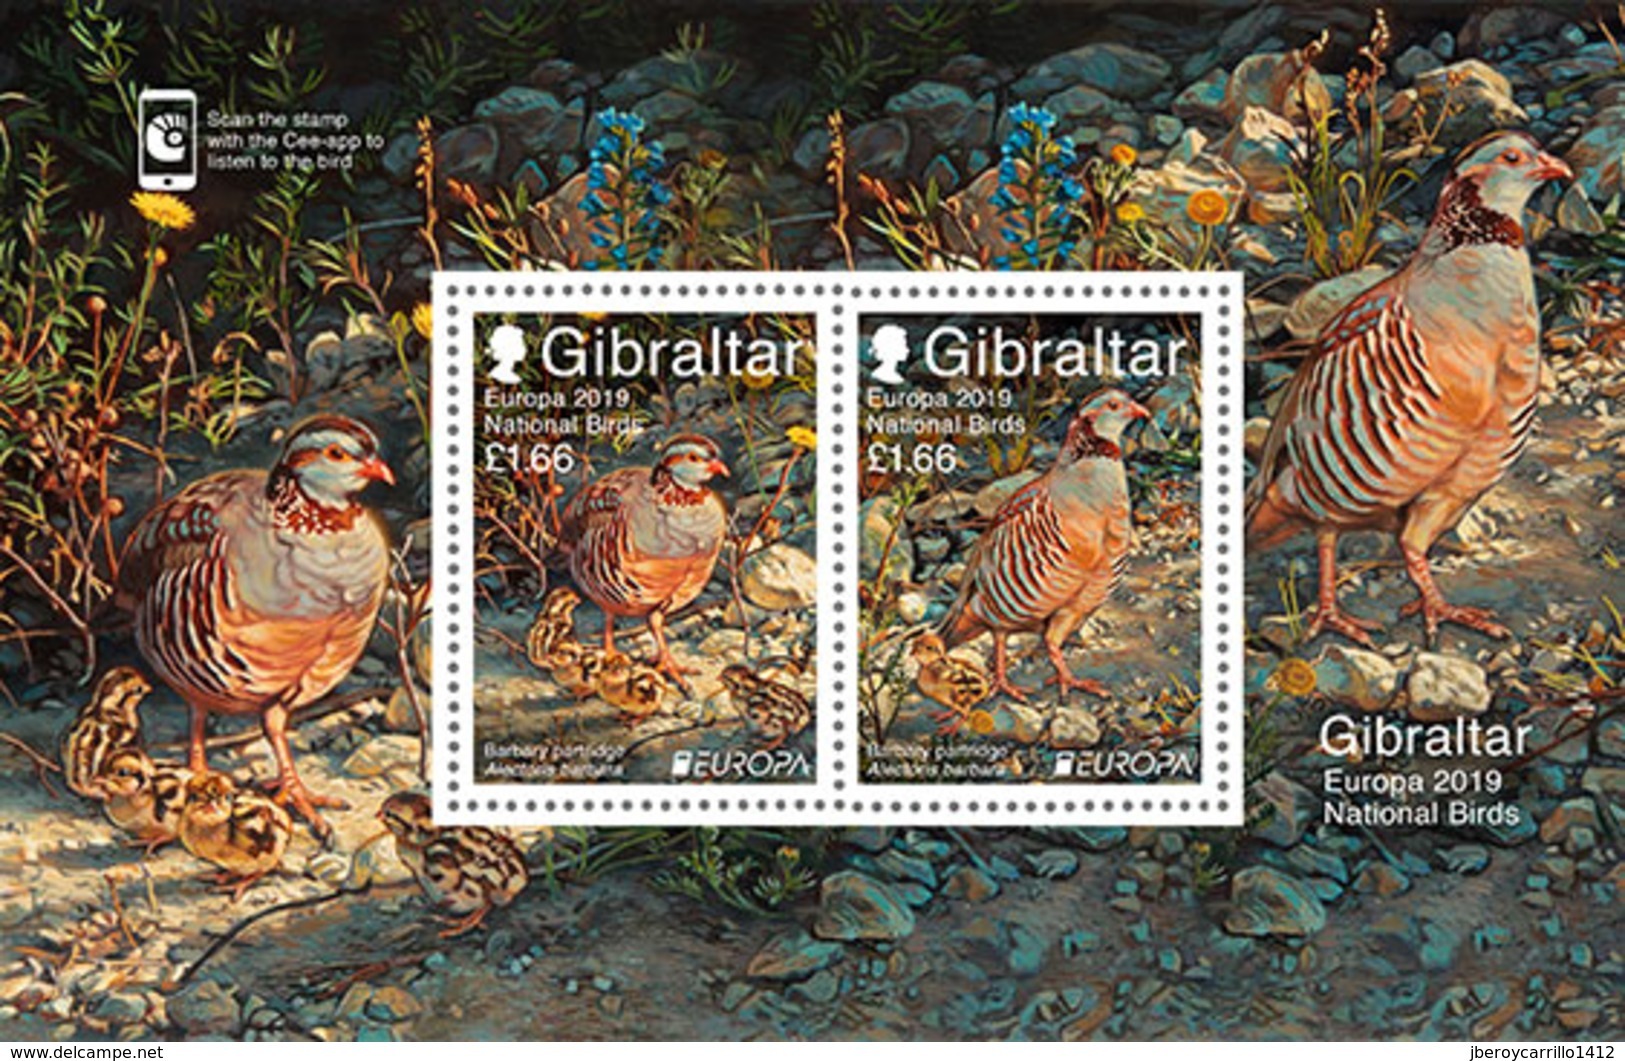 GIBRALTAR 2019 - EUROPA 2019 - -"AVES - BIRDS/WILDLIFE - VÖGEL - OISEAUX"- BARBARY PARTRIDGE  - SOUVENIR SHEET - Gallinaceans & Pheasants